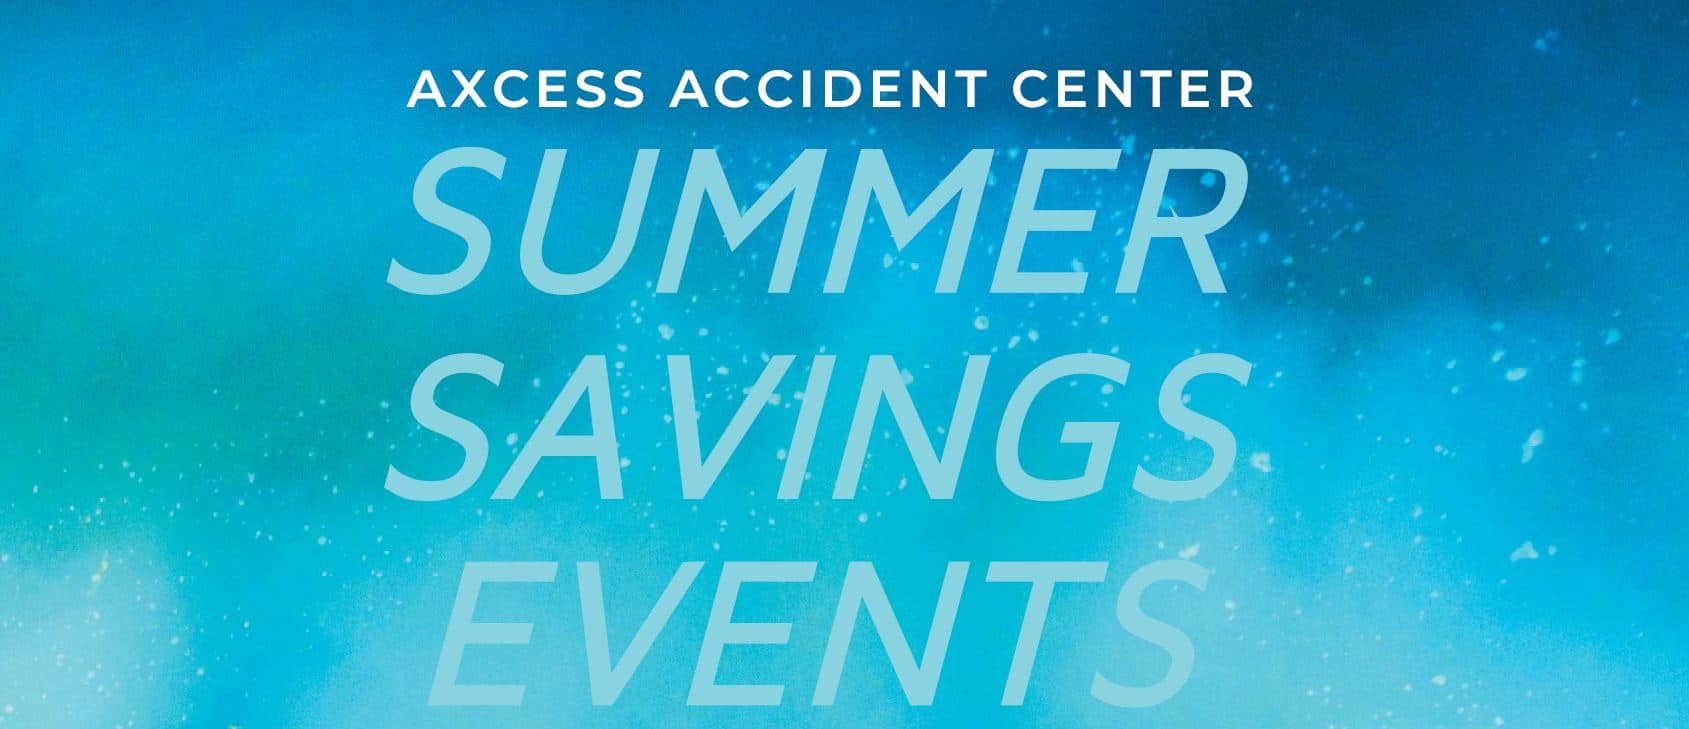 Summer Savings Axcess Accident Center Utah